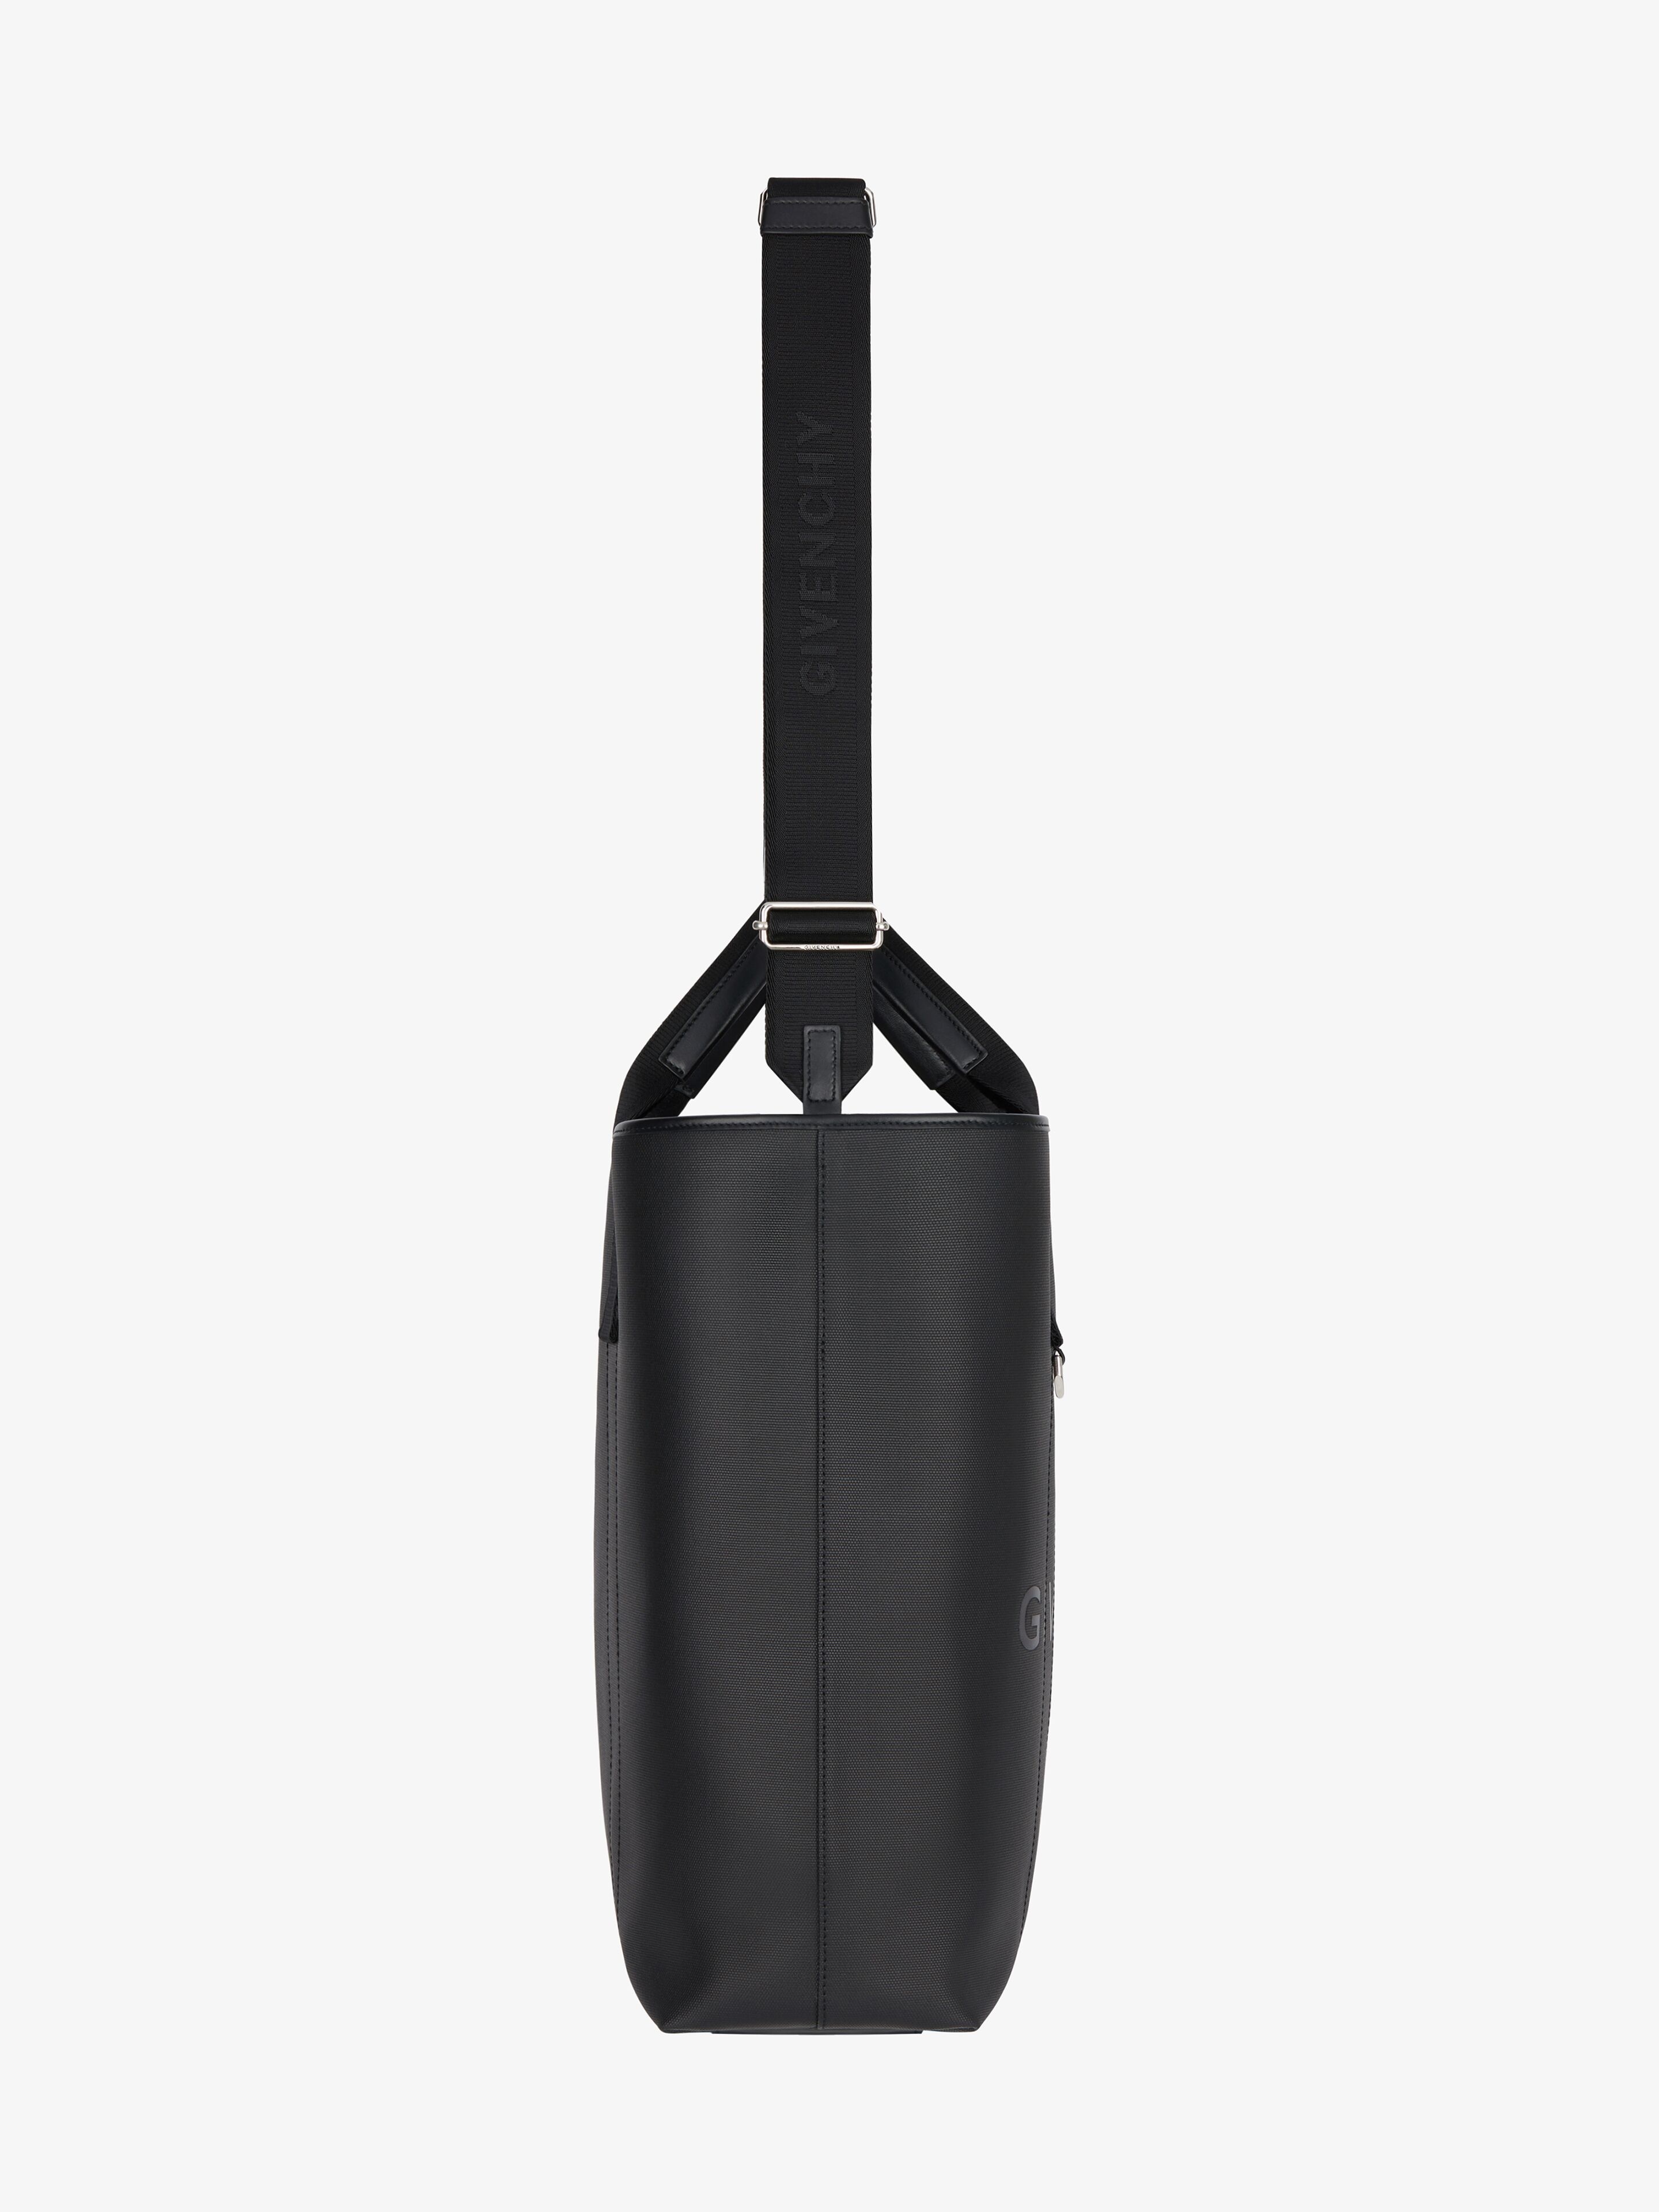 Givenchy - Men - G-Essentials logo-print Leather-trimmed Coated-canvas Tote Bag Black